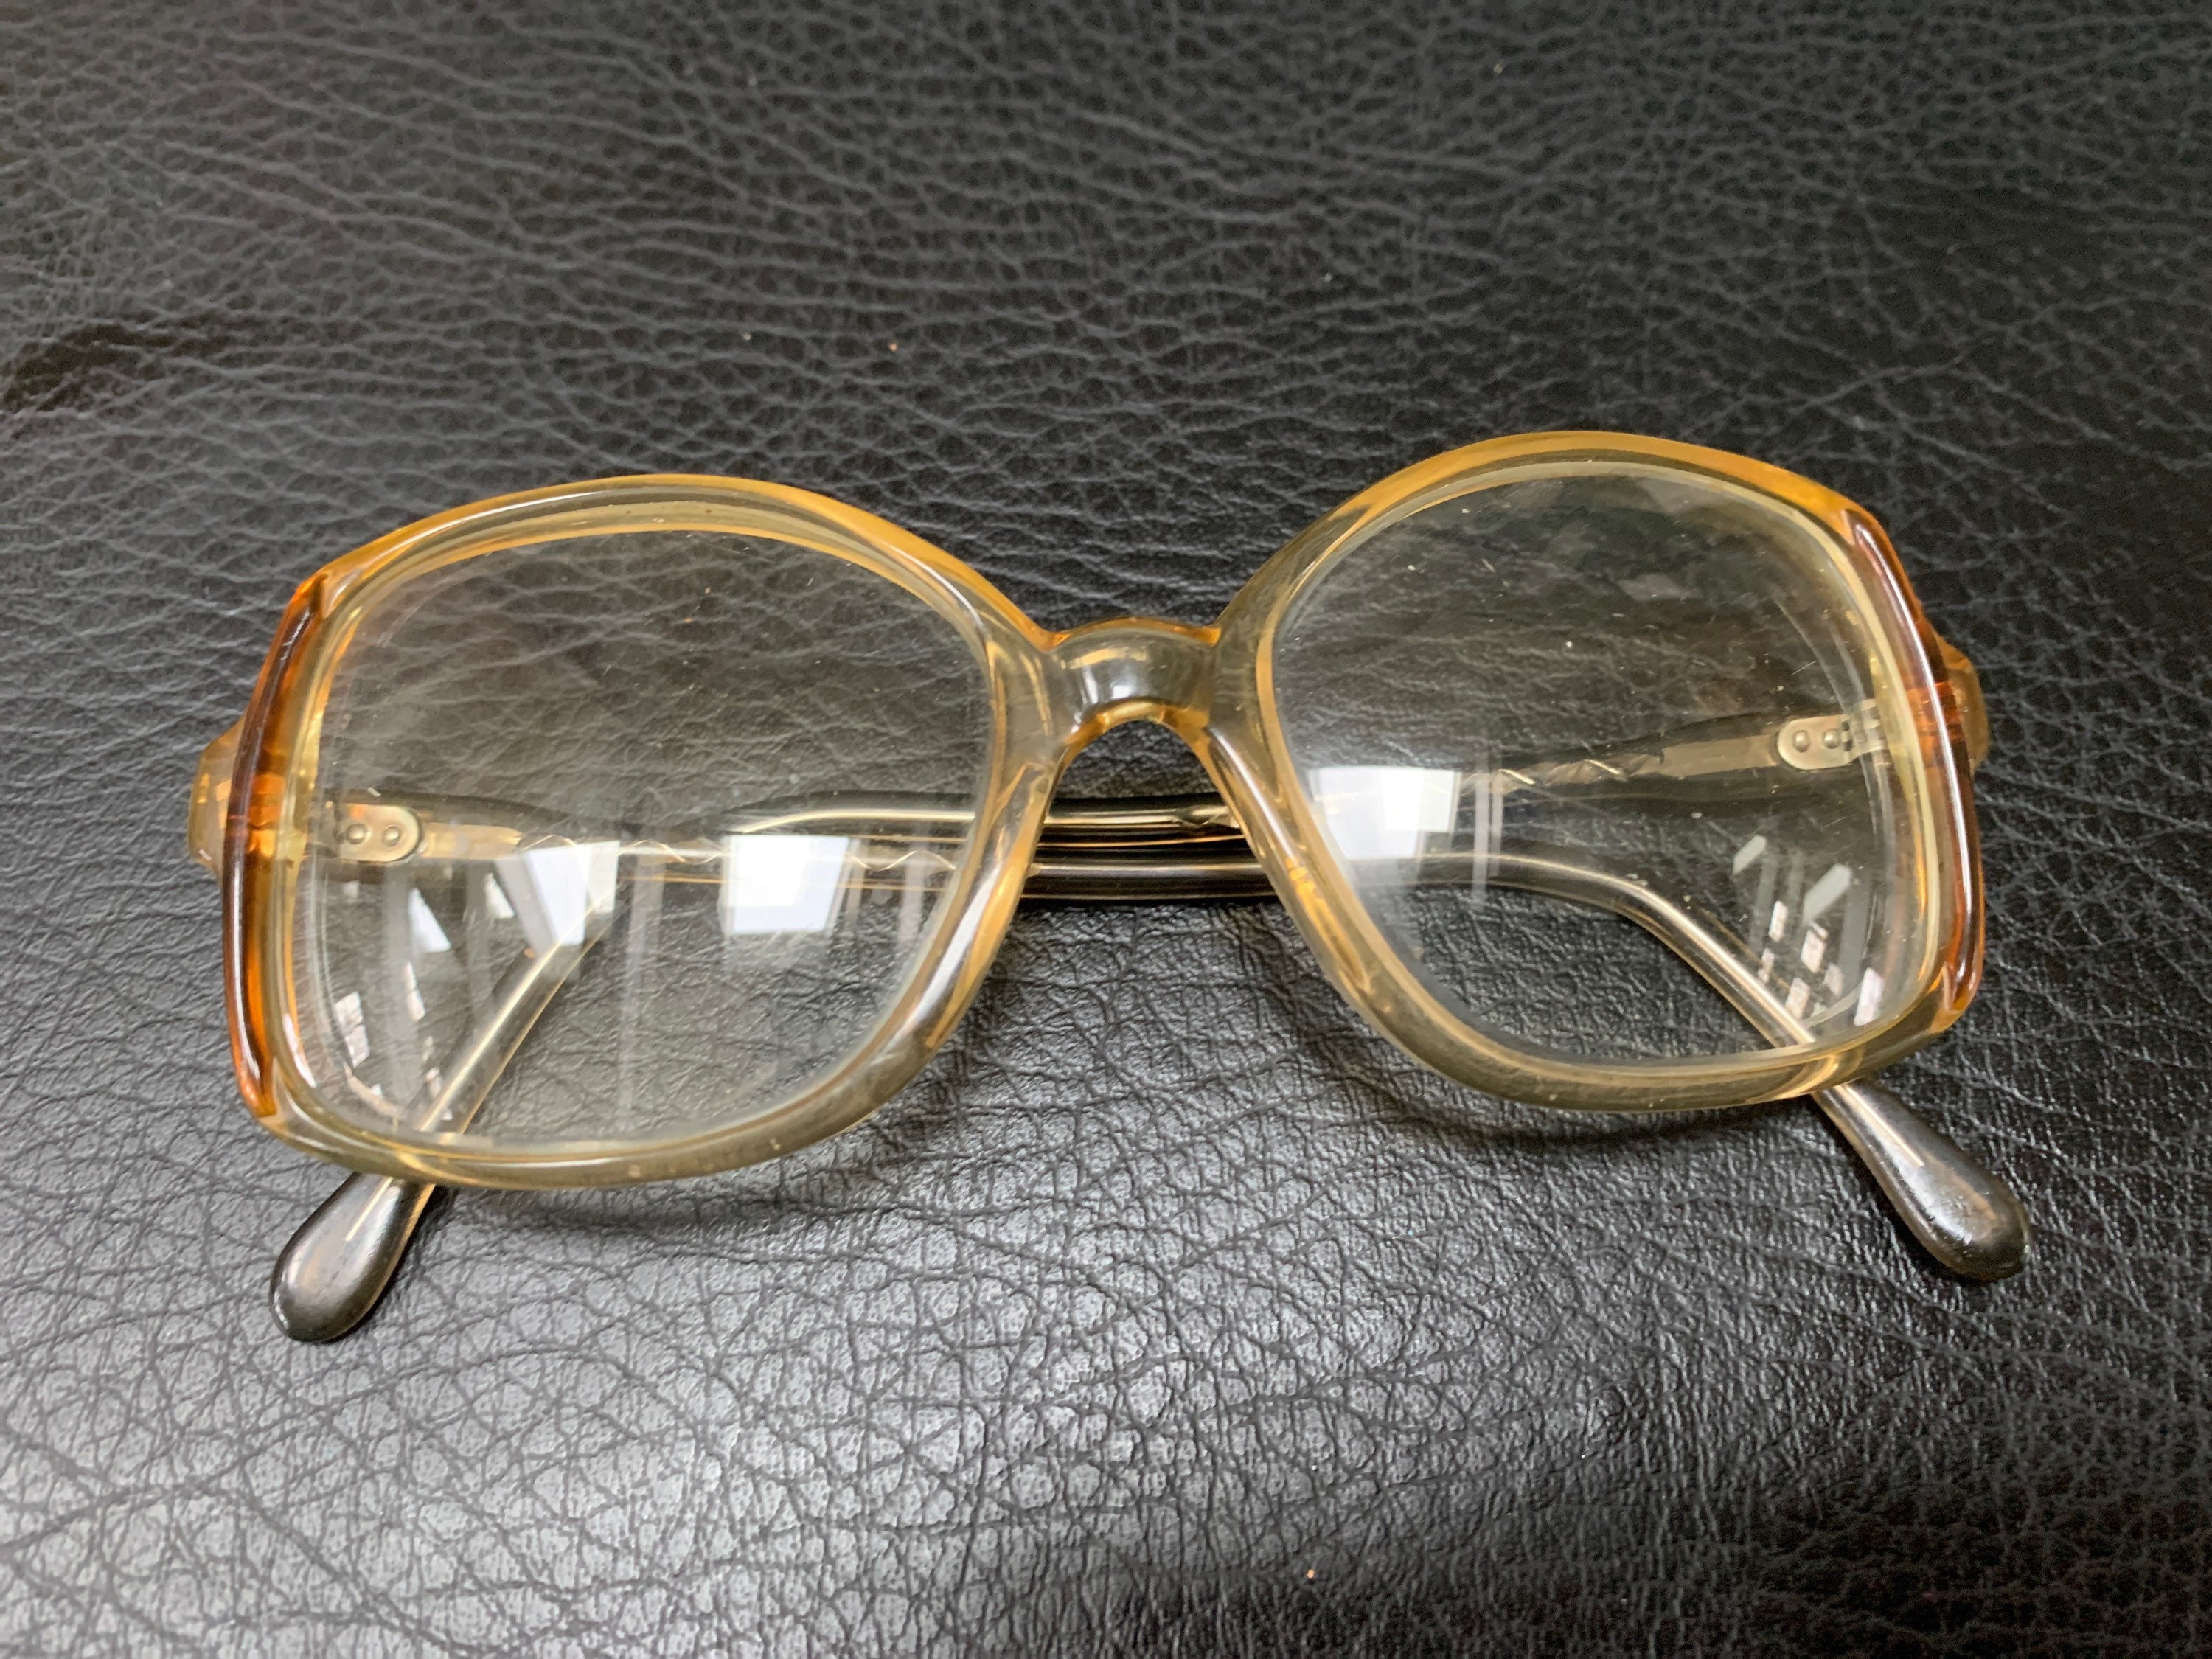 2pcs 17mm Wide Bridge Clear U Shaped Plastic Anti Slip Nose Pads Frame  Eyeglass Glasses Reading Specs Spectacles Transparent Screw on Part 